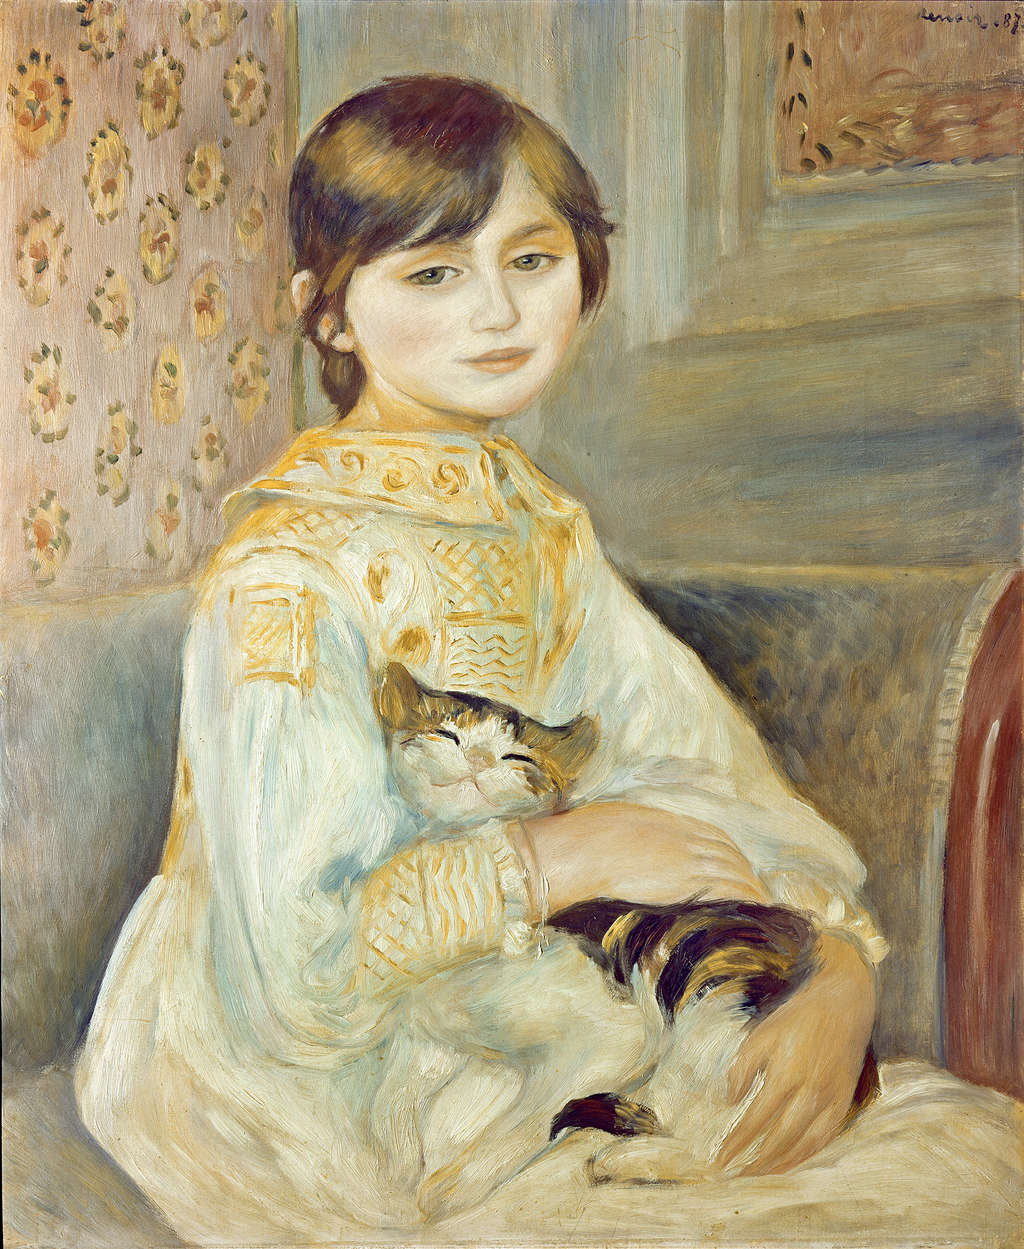             Mademoiselle Julie met kat" muurschildering van Pierre Auguste Renoir
        